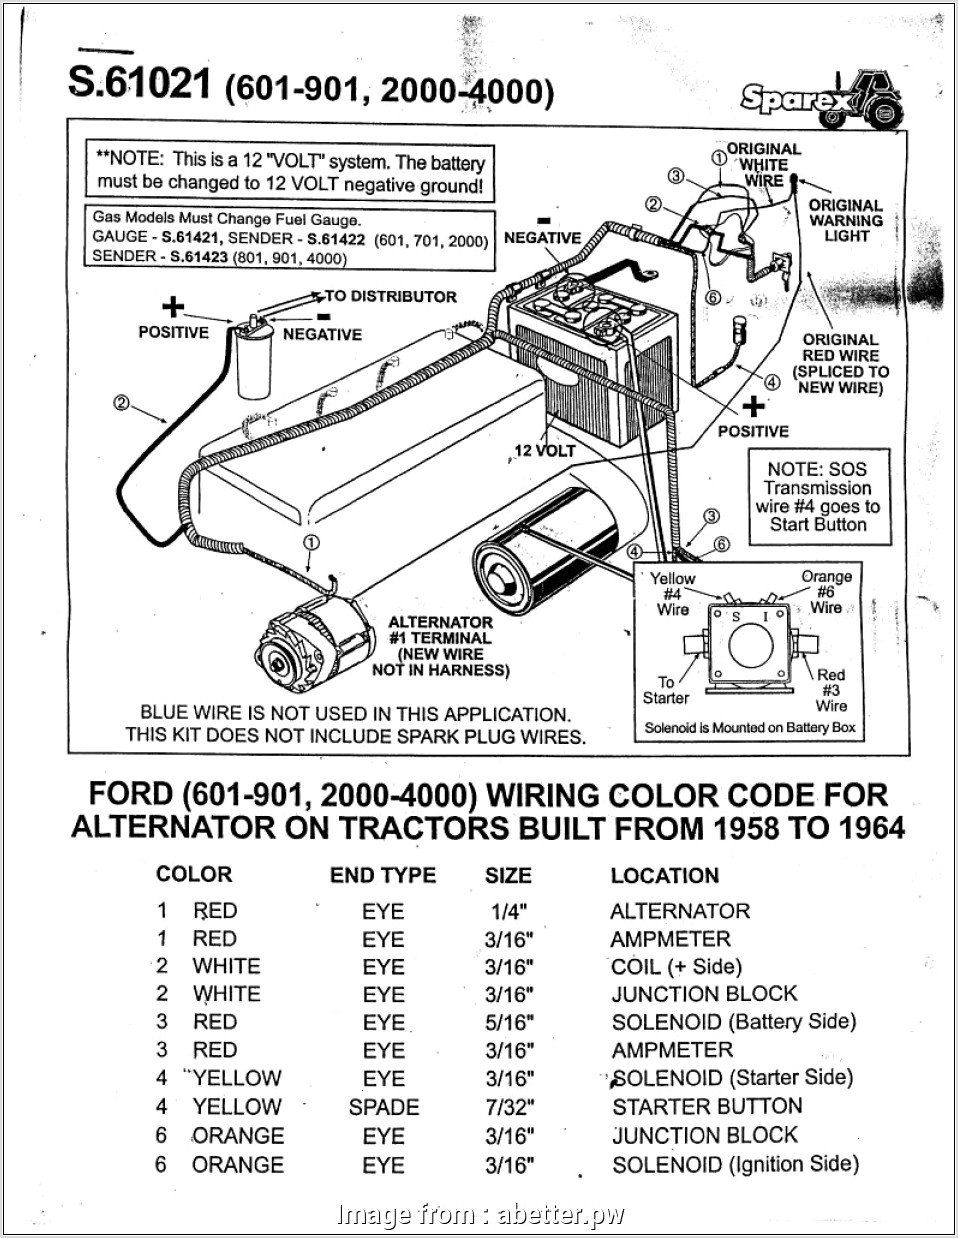 Ford 8n Wiring Harness Diagram